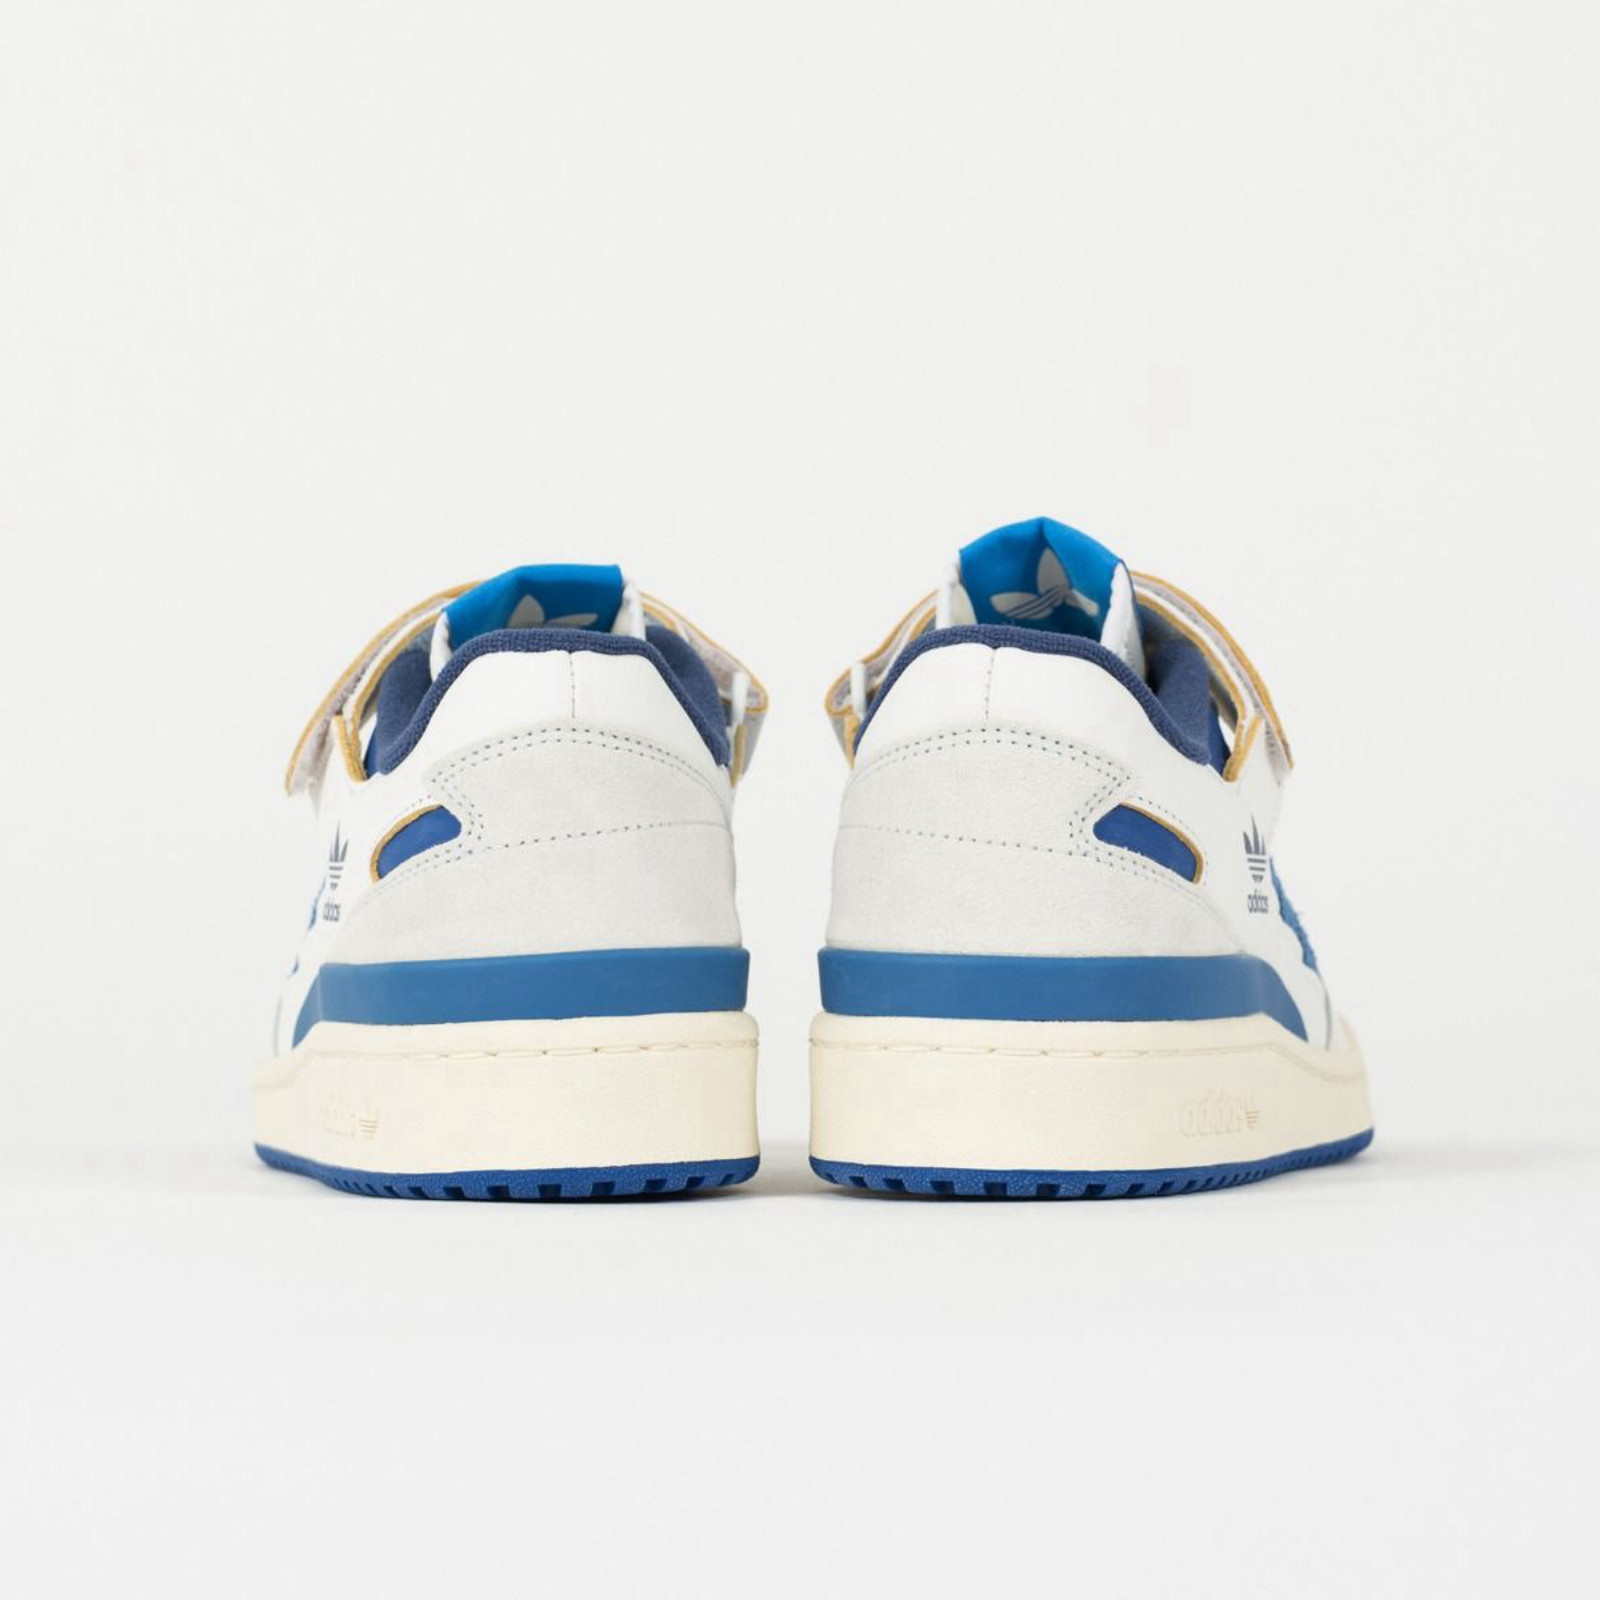 Adidas Forum 84 Low
White / Blue